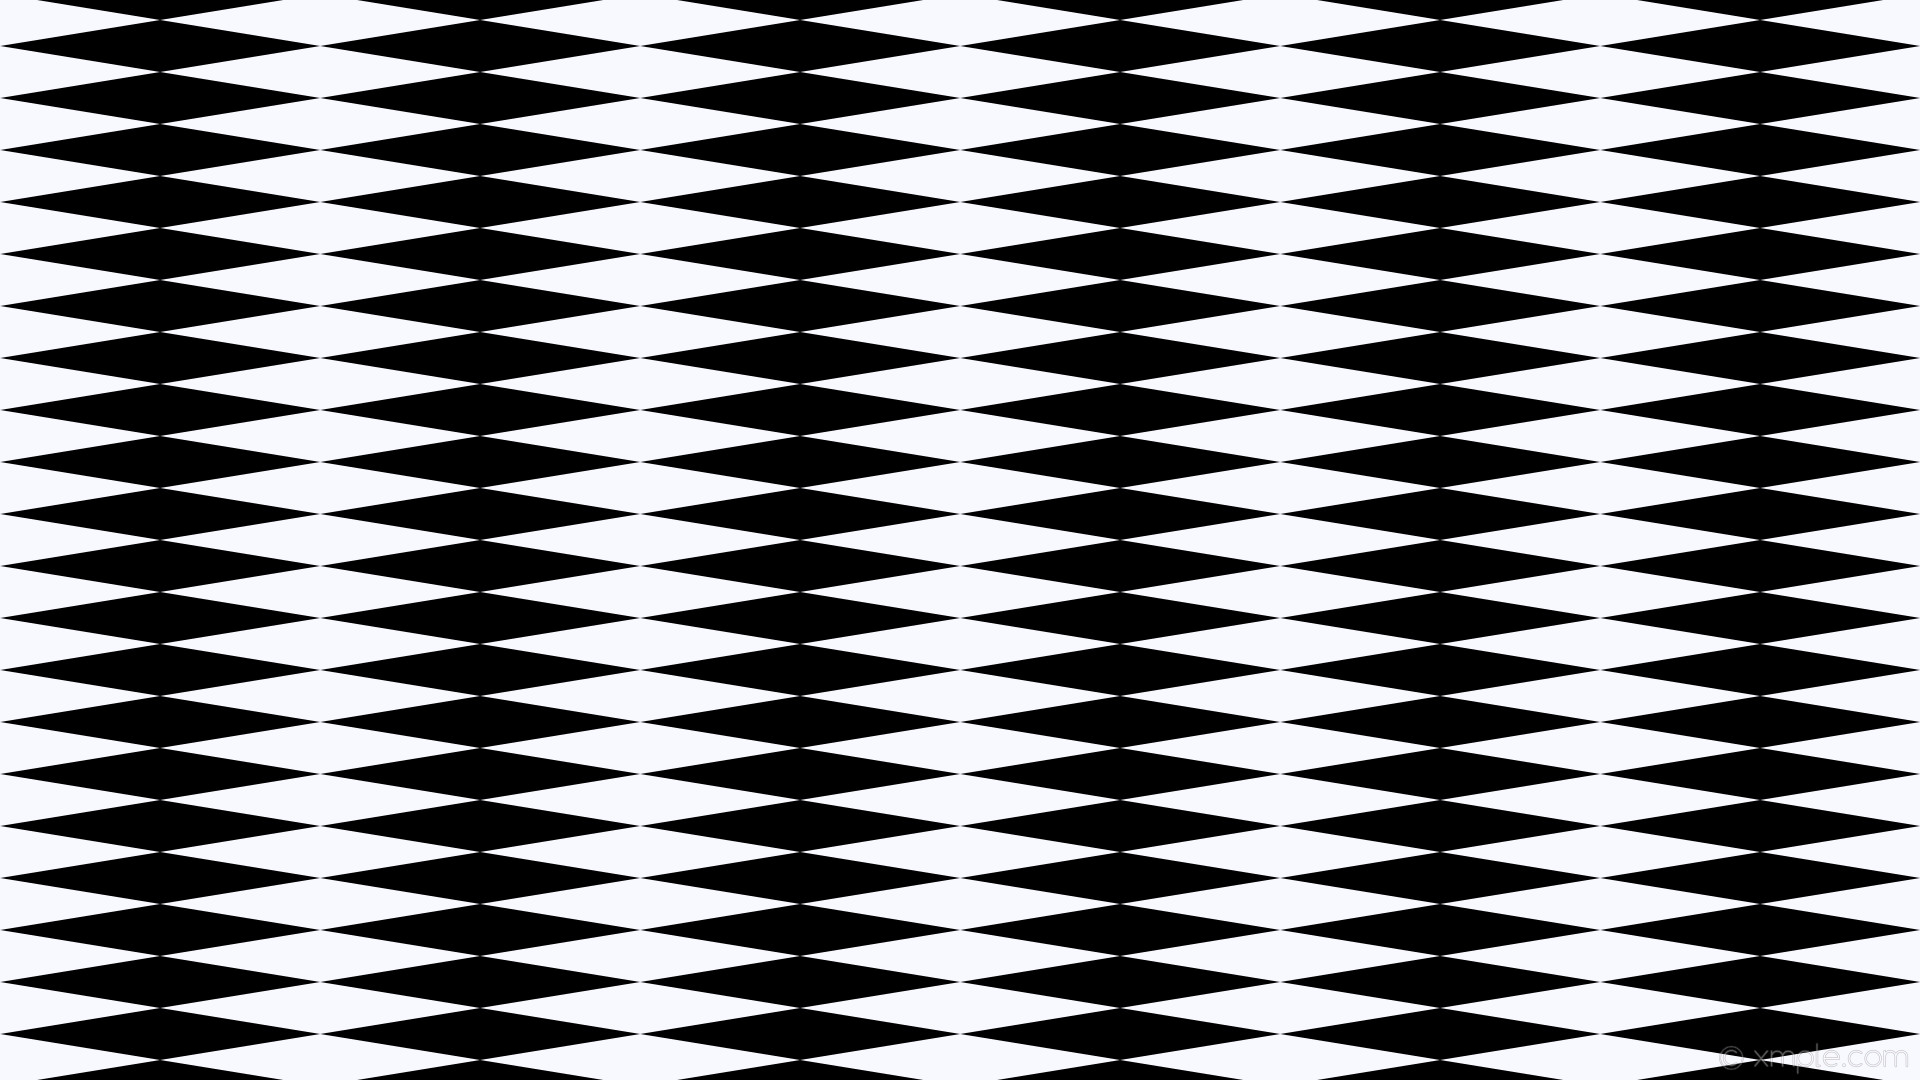 1920x1080 wallpaper white diamond rhombus black lozenge ghost white #f8f8ff #000000  0Â° 320px 52px